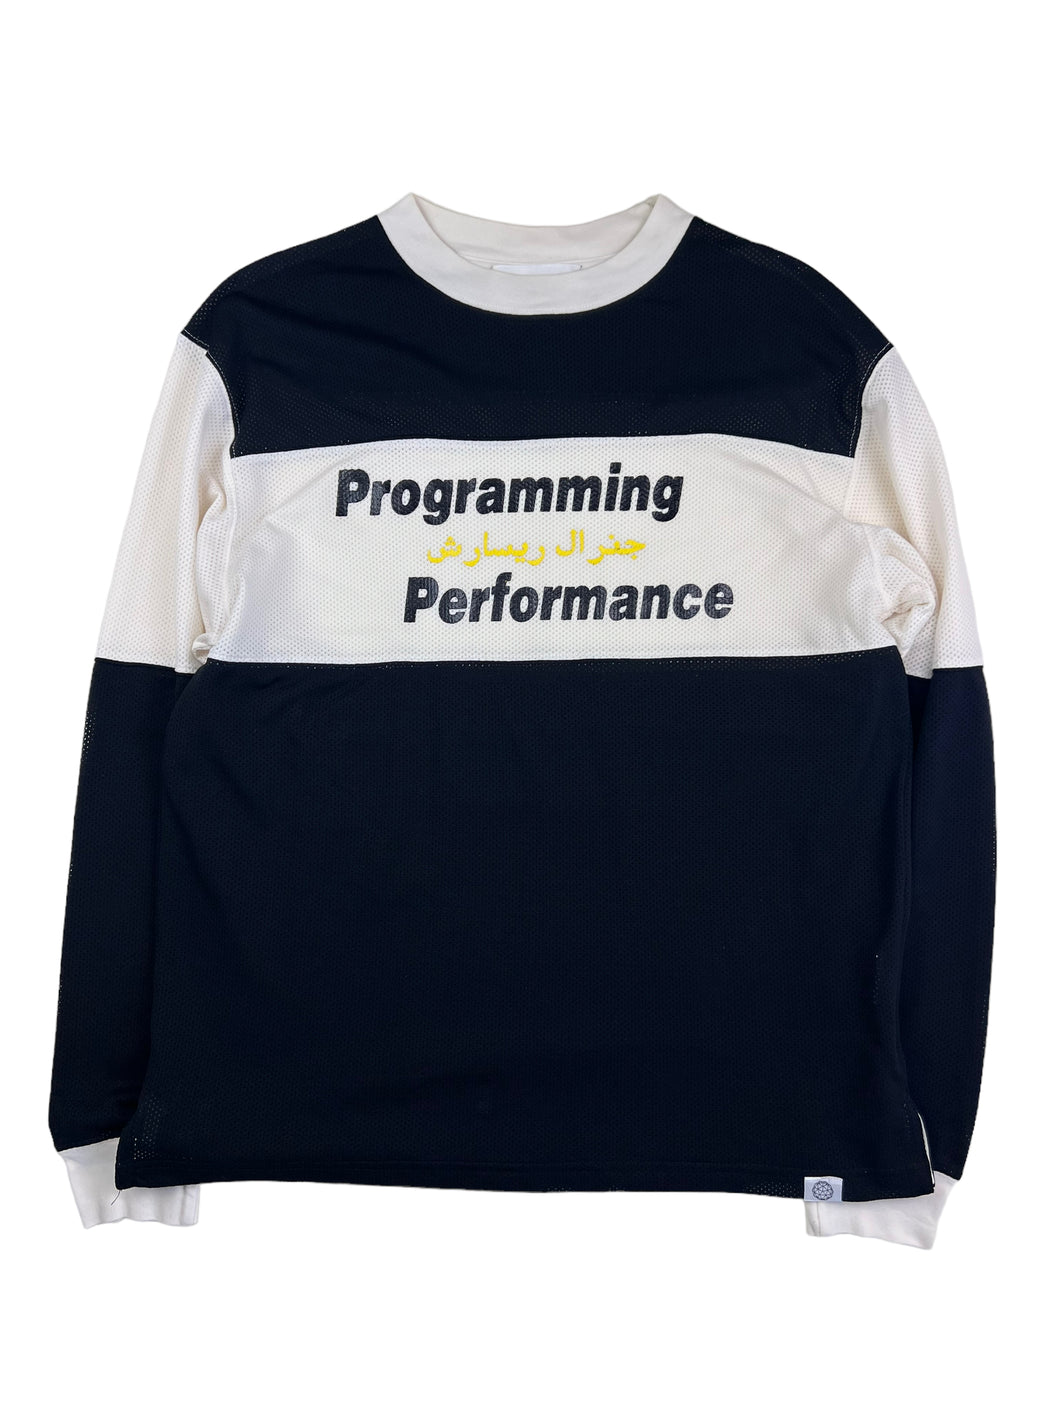 2000 Programming Performance Mesh L/S (Medium)